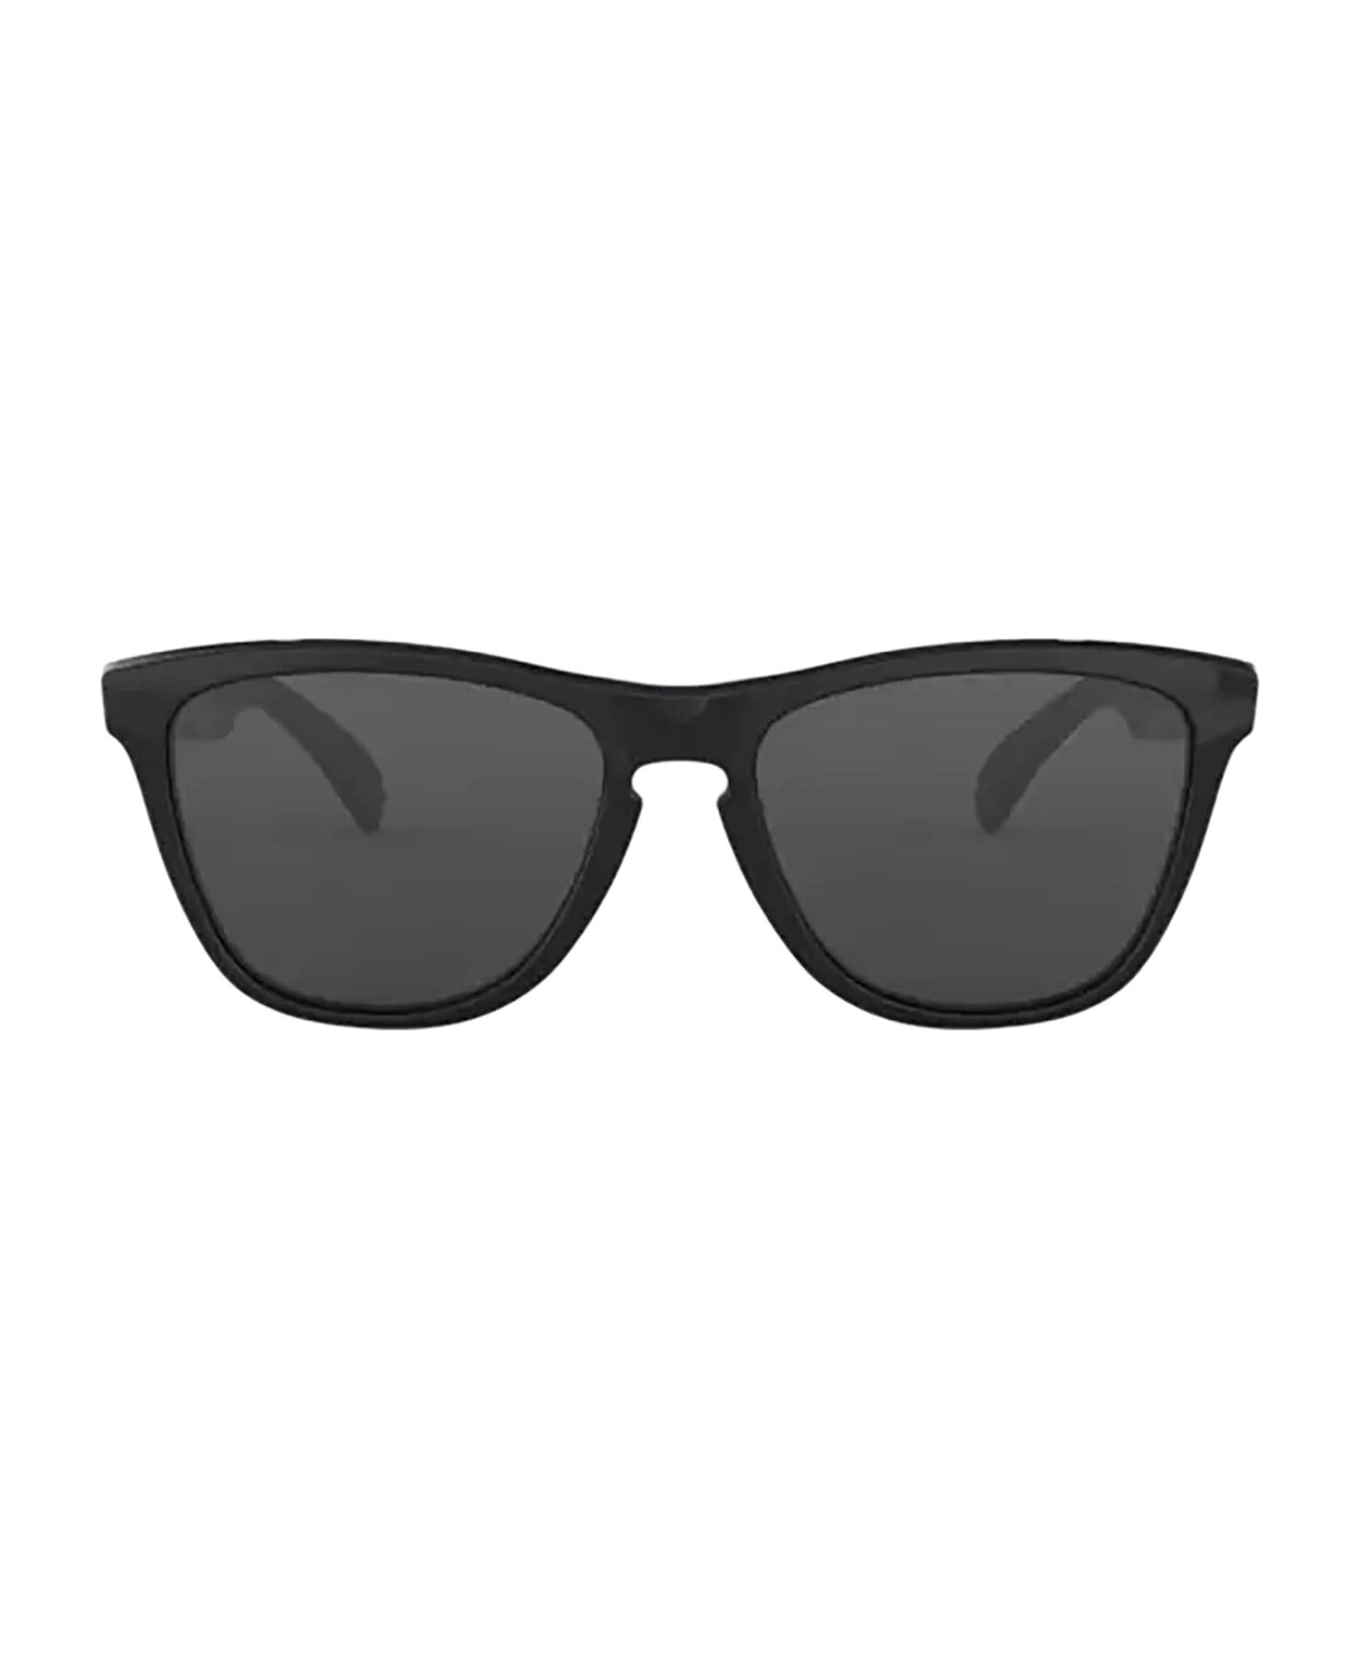 Oakley Oo9013 Polished Black Sunglasses - Polished Black